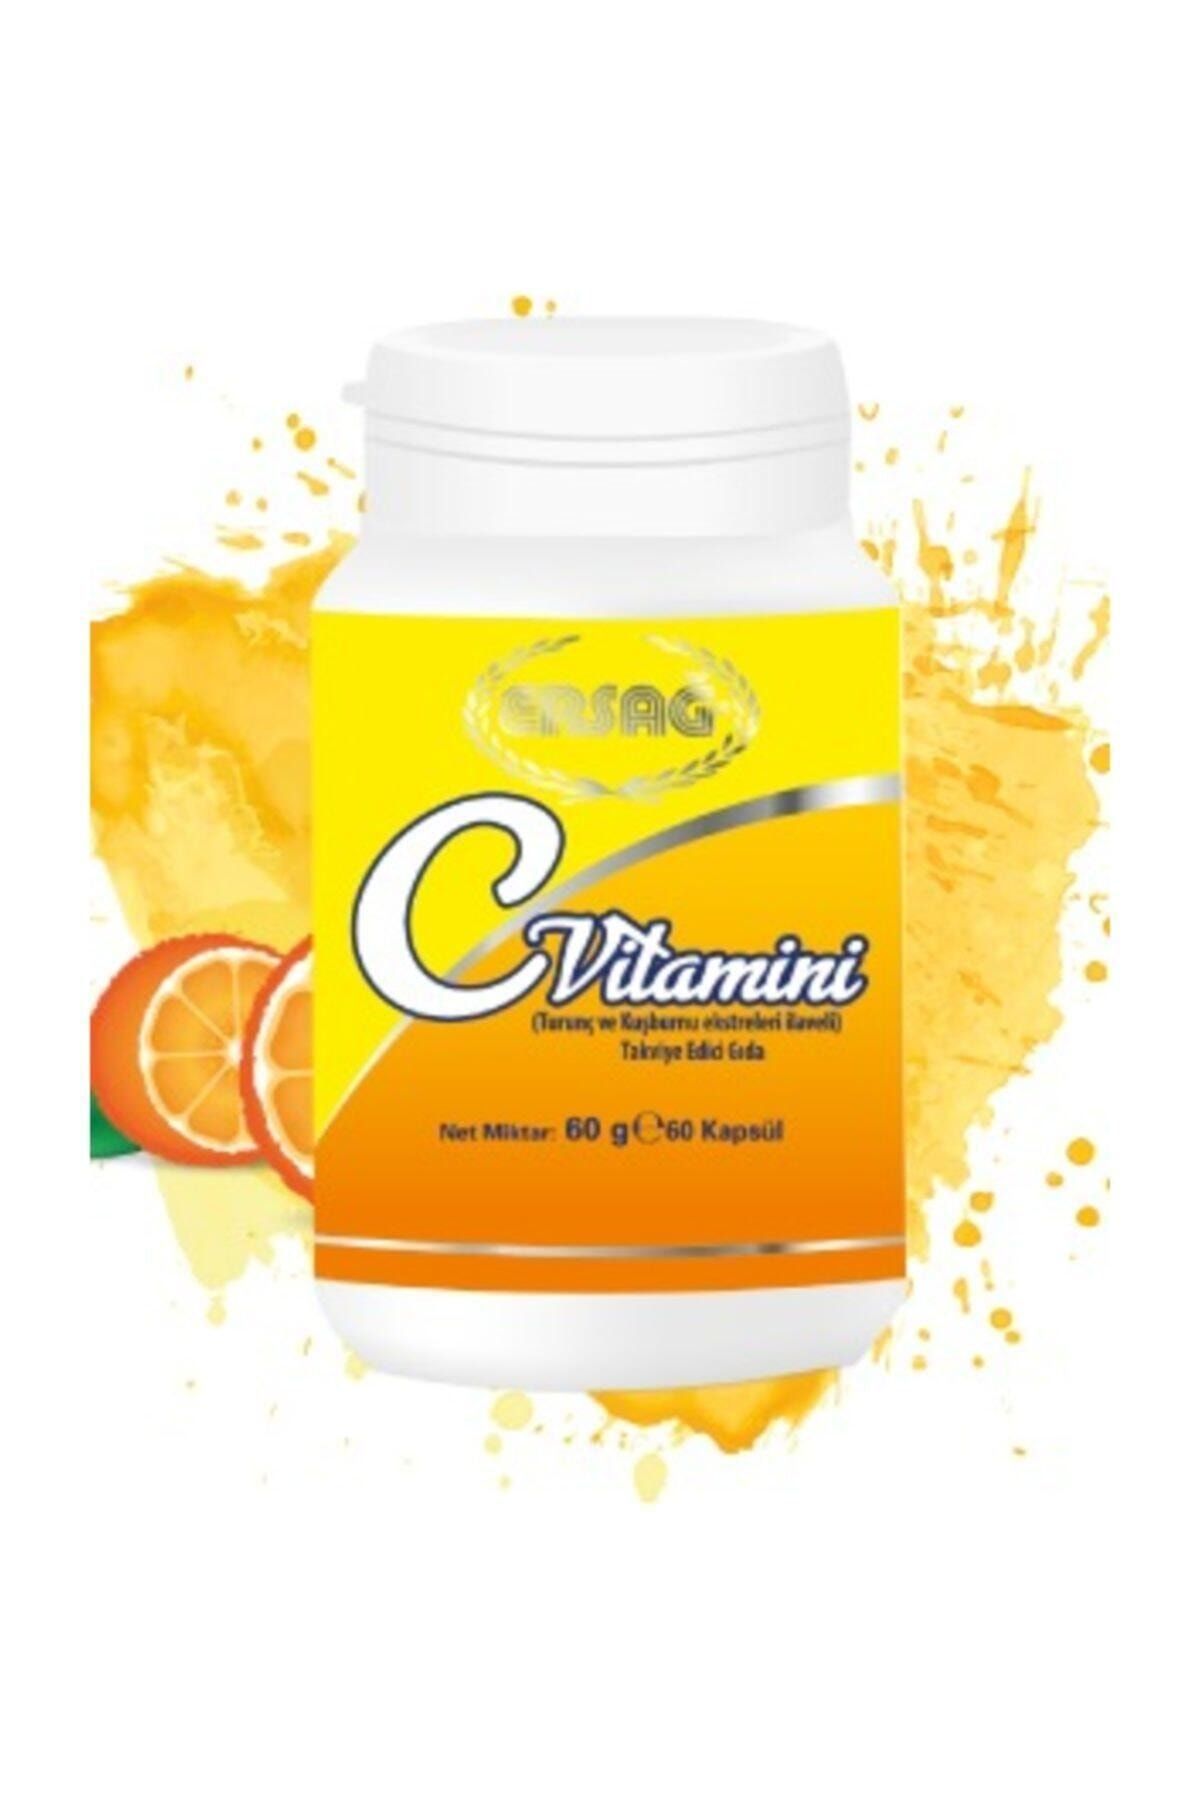 Ersağ C Vitamini